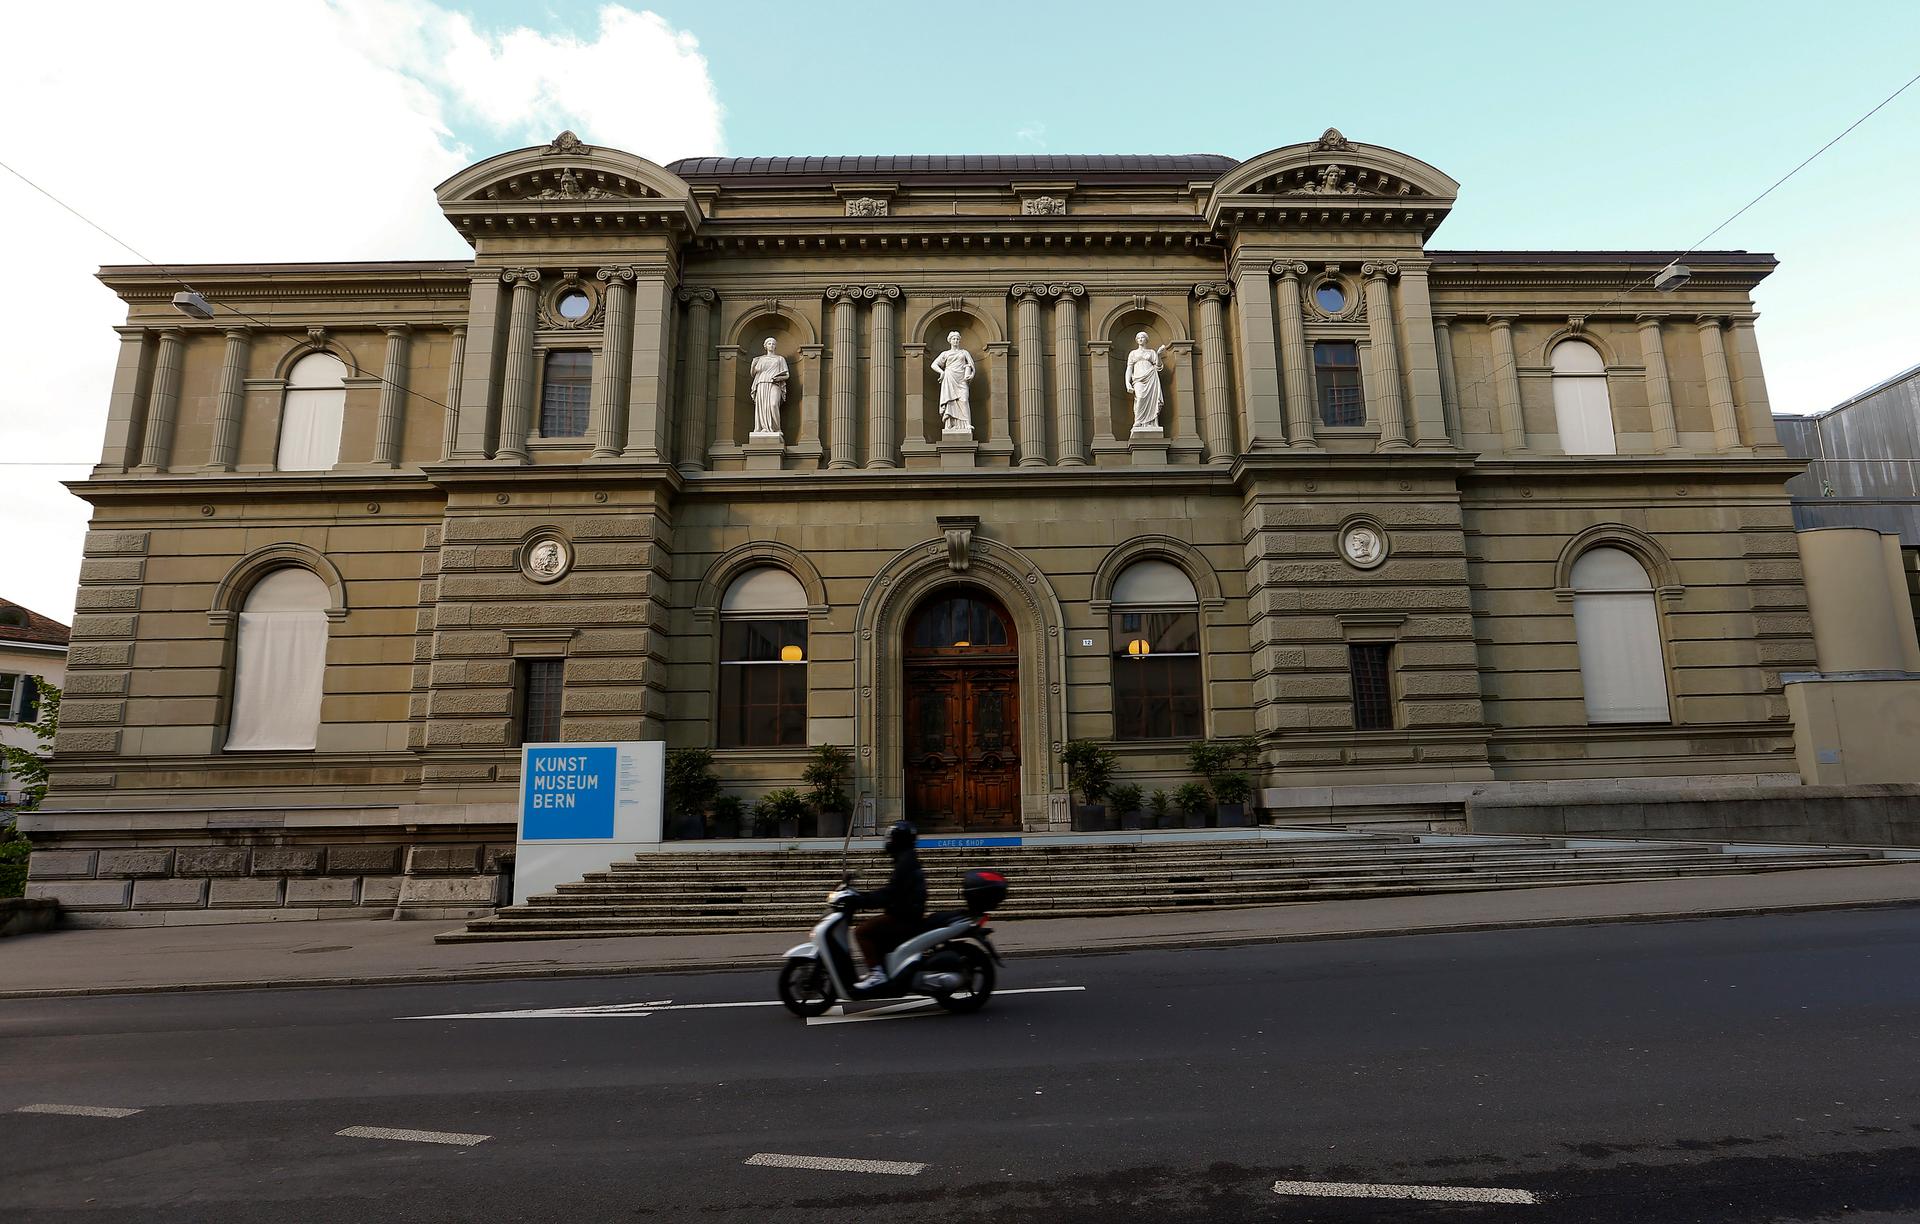 The Kunstmuseum Bern art museum in the Swiss capital of Bern was named as the sole heir of Cornelius Gurlitt.